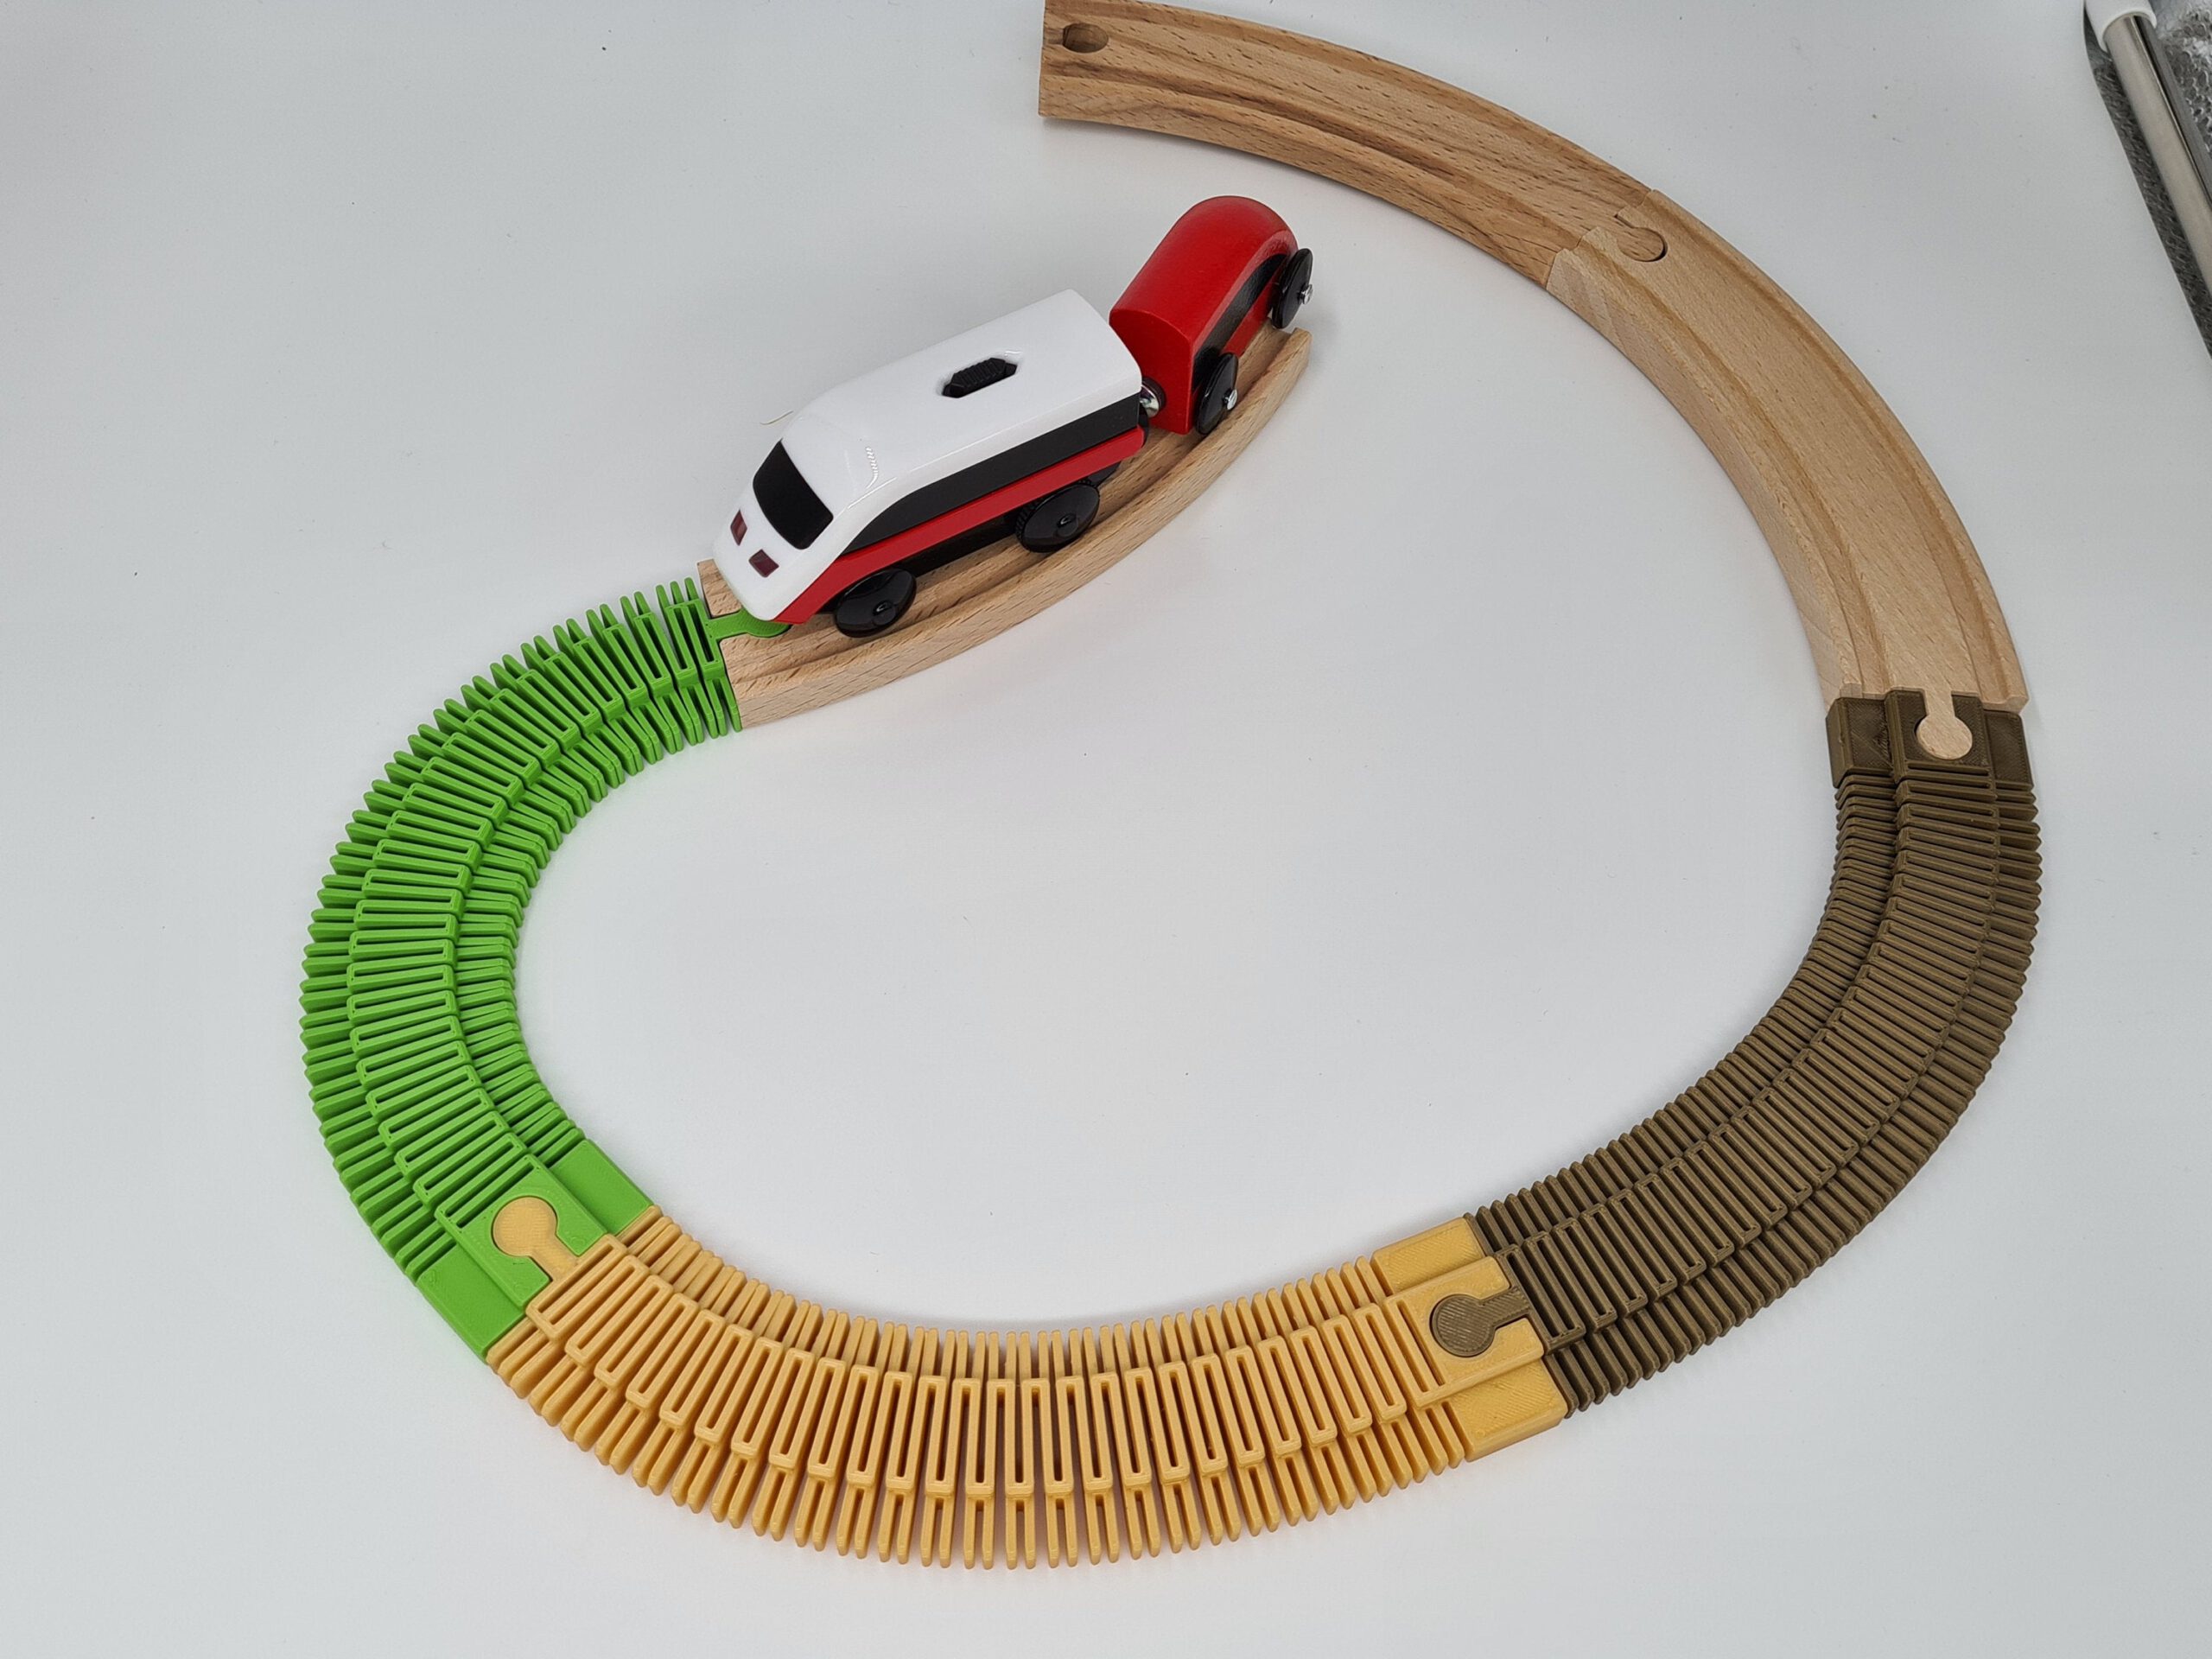 Wooden Train Track Slope / Brio Extension / Imaginarium / Thomas / Lillabo  / Melissa & Doug 